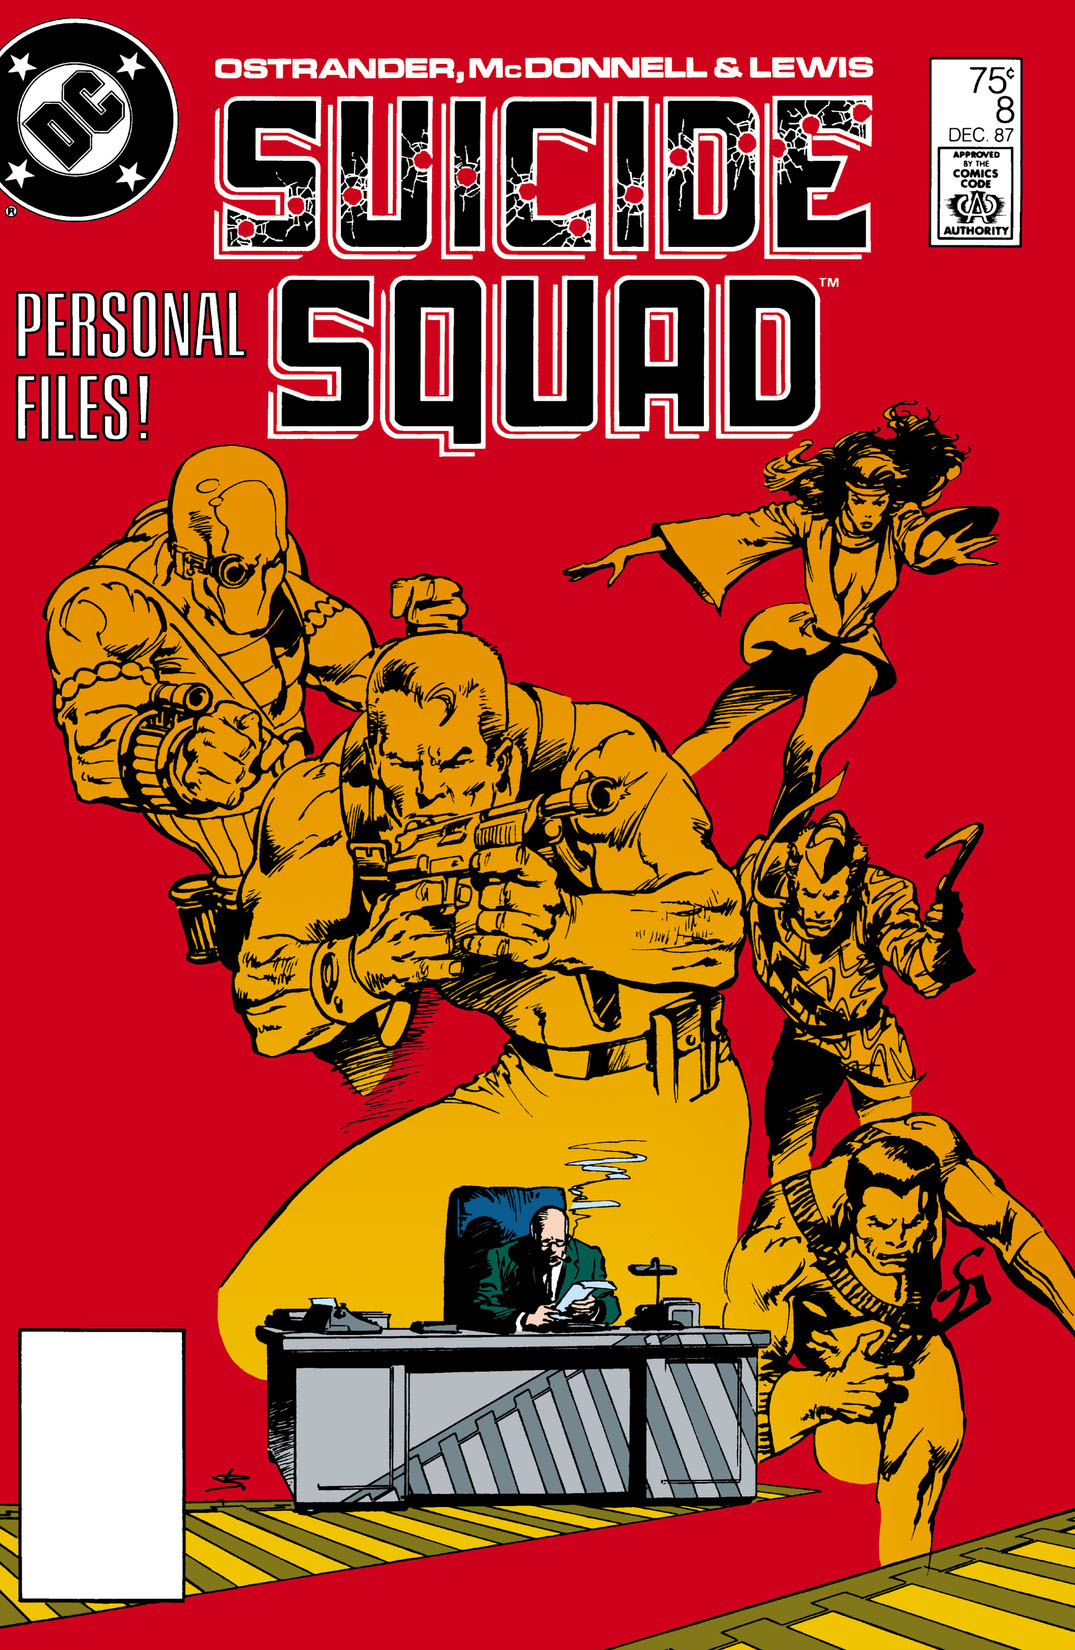 Suicide Squad (1987-) #8 preview images